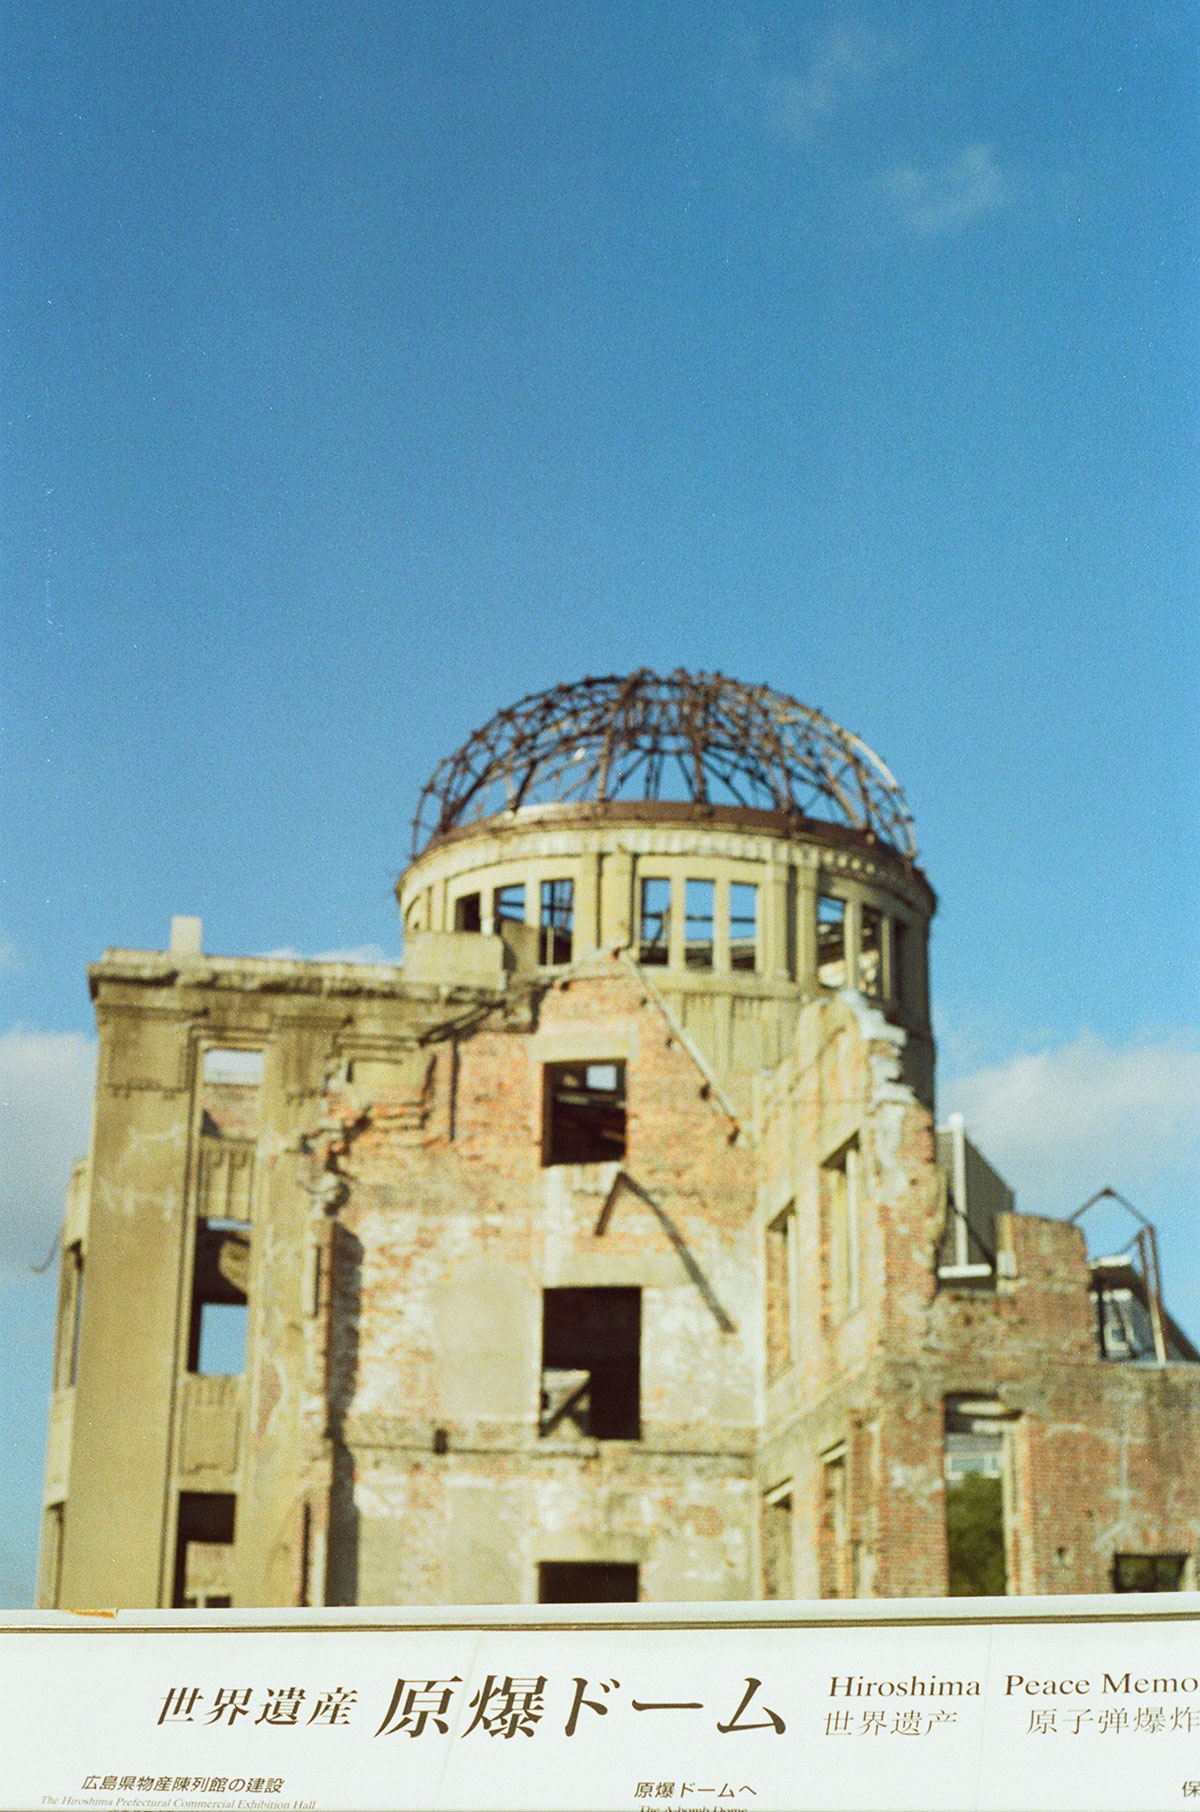 Hiroshima Peace Memorial rendition image